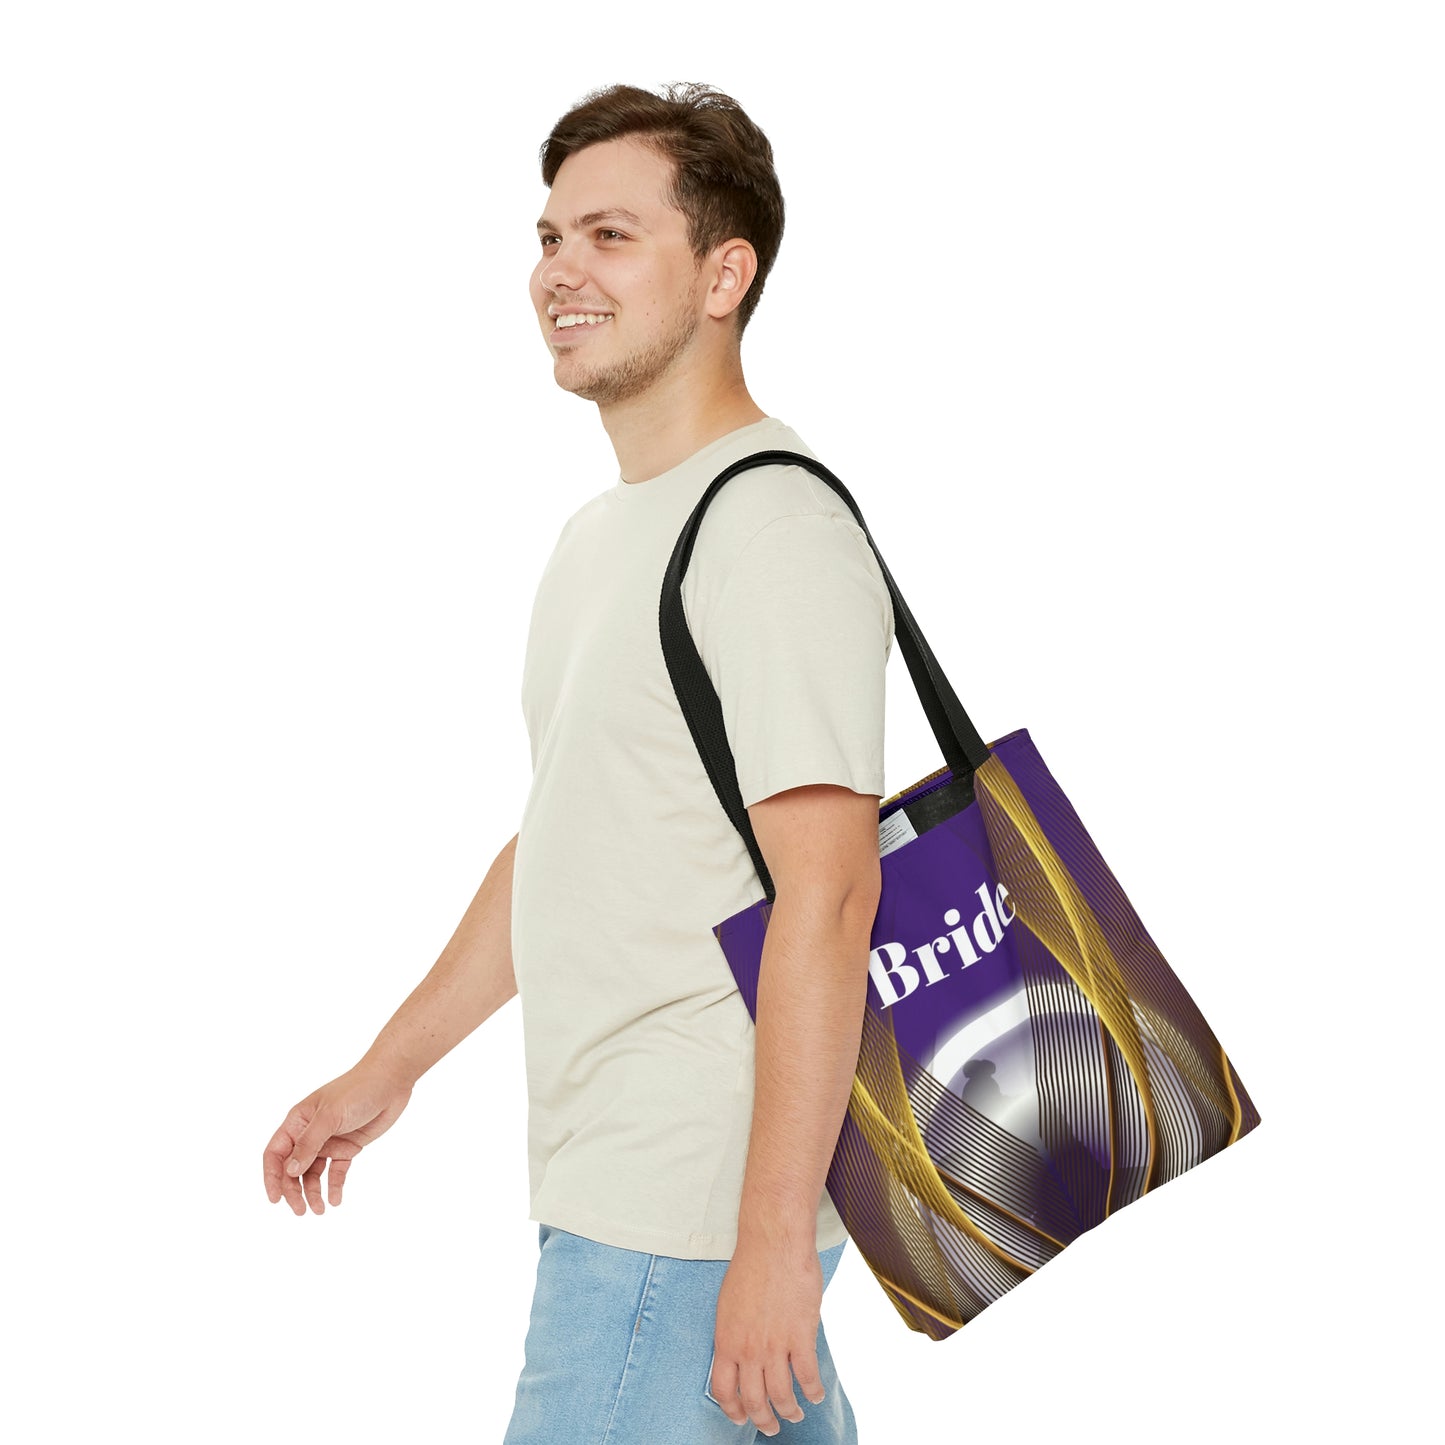 Purple Bridal Tote | Custom Bridal Shower Gift Bag | Wedding Handbag | Gift For Bride | Beach Wedding Shoulder Bag